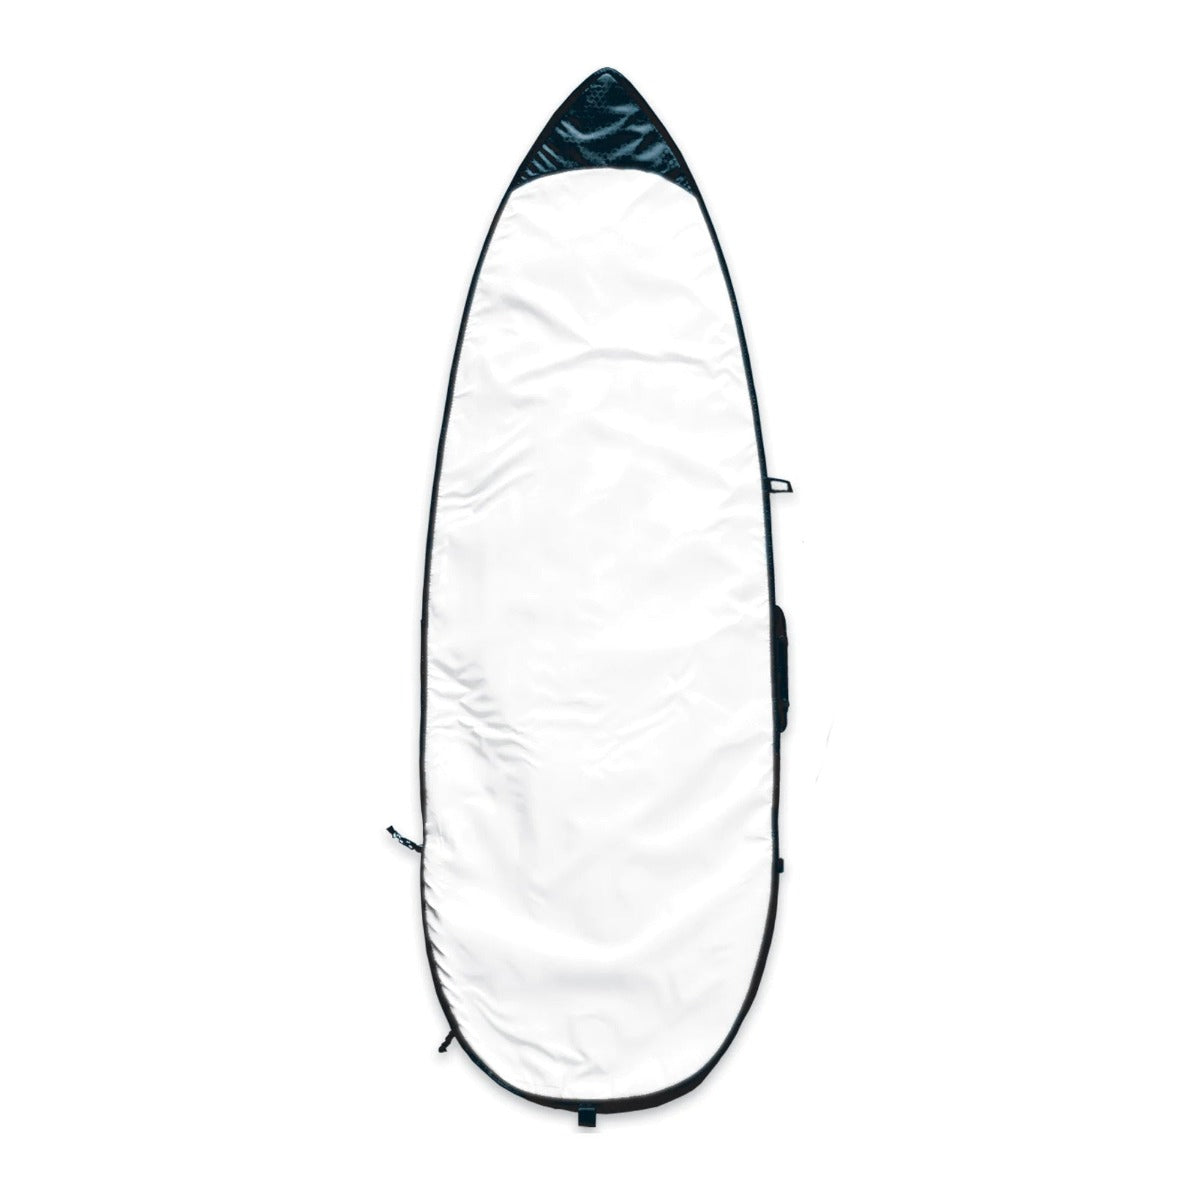 channel-islands-shortboard-surfboard-bag-cover-3mm-charcoal-white-hex-60-64-6-70-76-cover-bag-blacksheepsurfco-galway-ireland